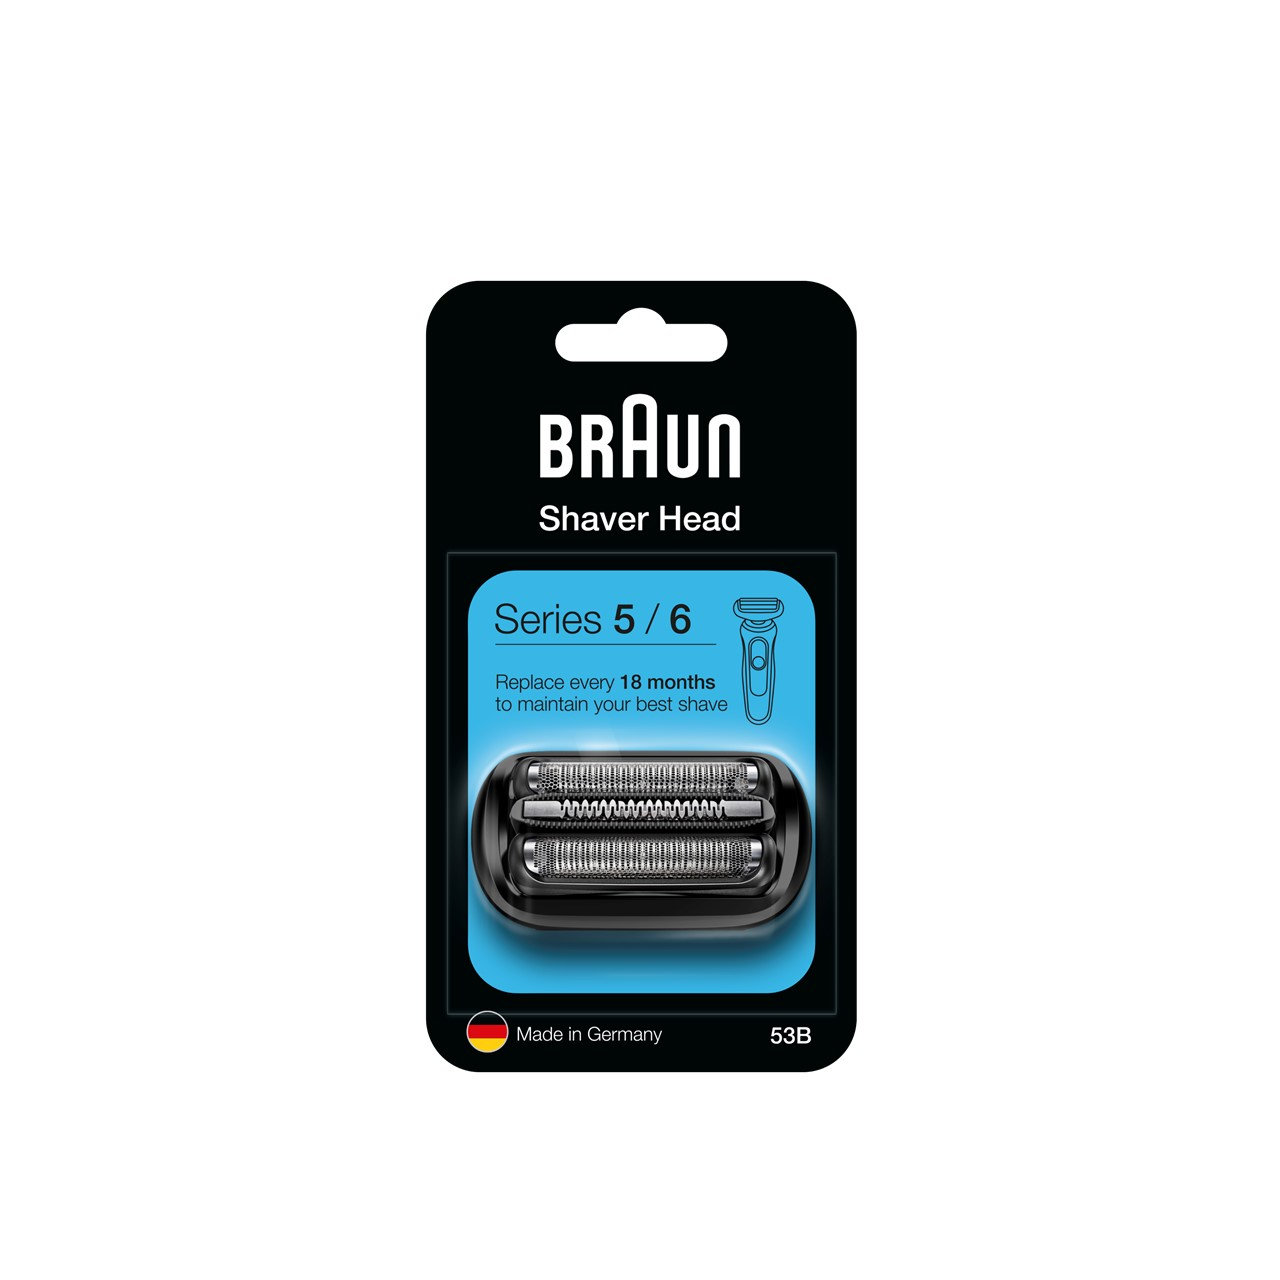 For Braun Series 5/6 Braun Shaver 53B Replacement Head